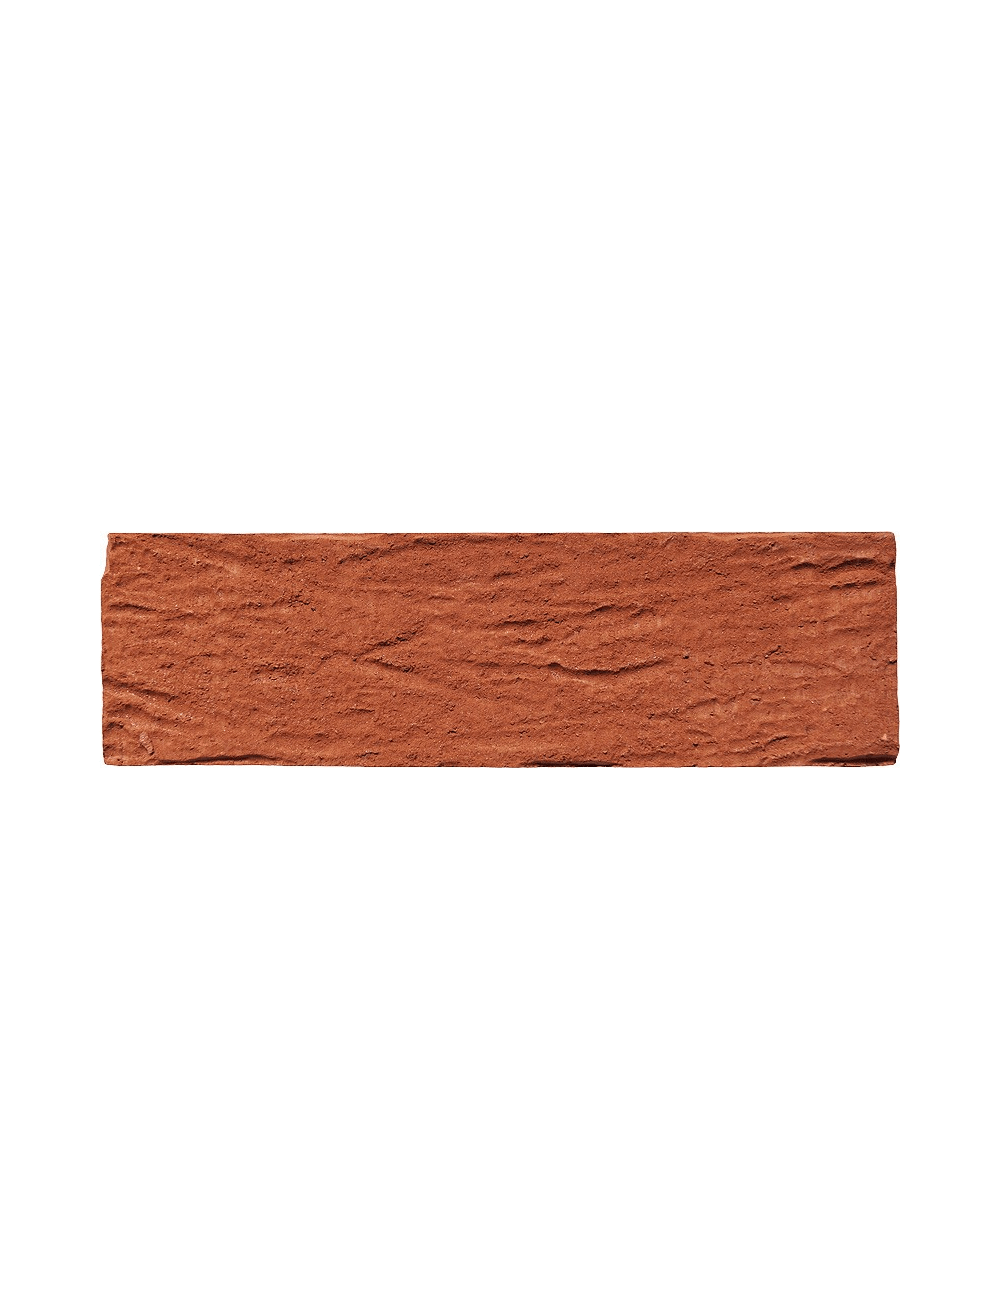 Placaj ceramic Klinker - Marrakesh Dust (HF01) 240X71X10